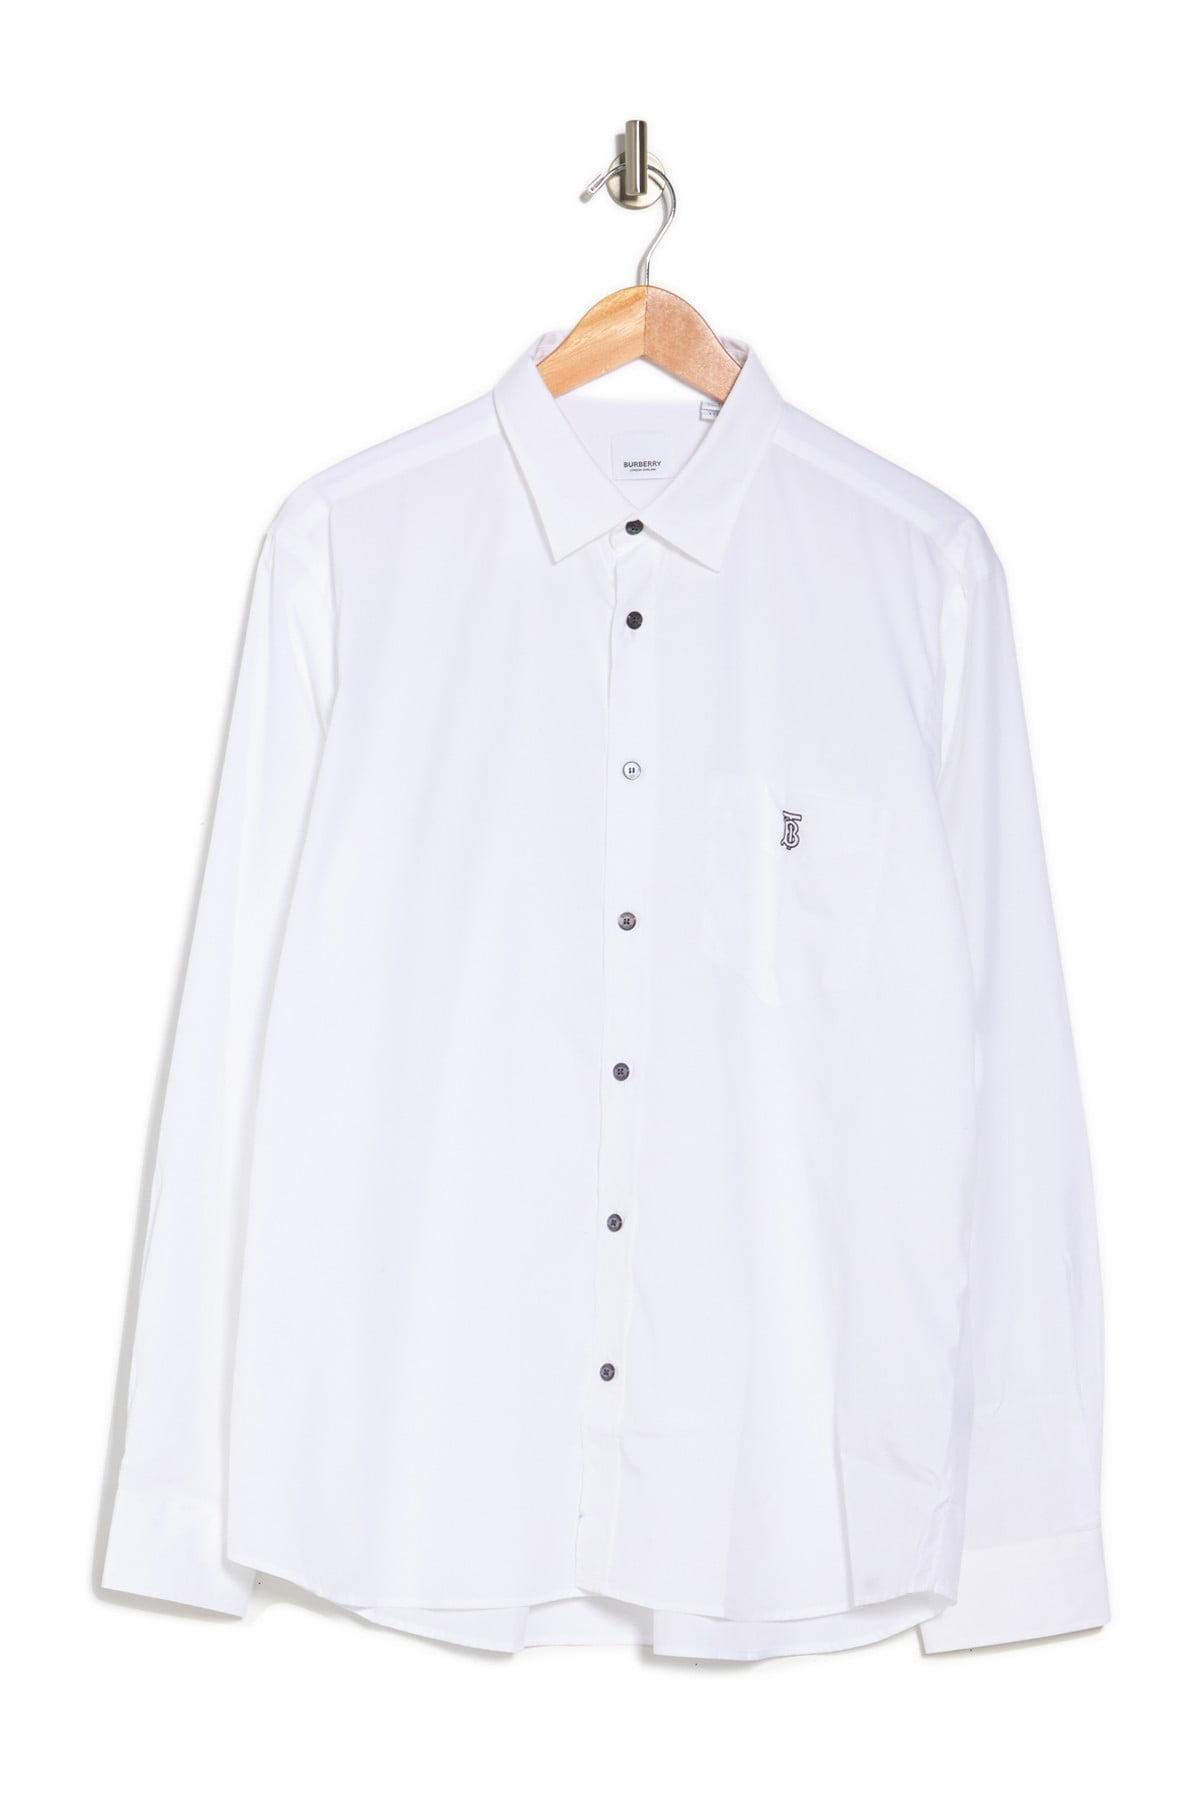 Burberry Monogram Motif Stretch Cotton Poplin Shirt in White for 